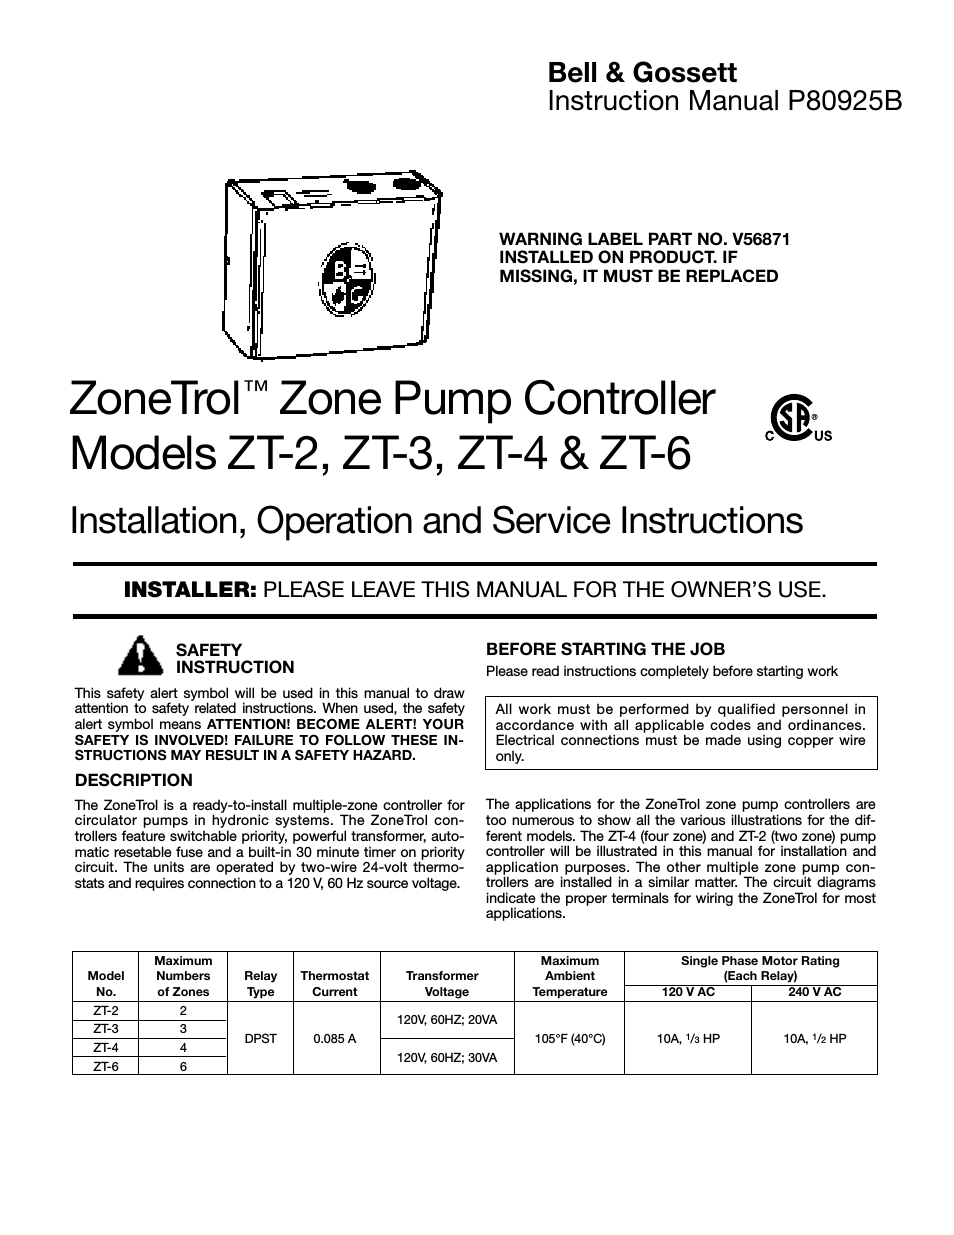 P80925B Zone Trol Zone Pump Controller ZT-6